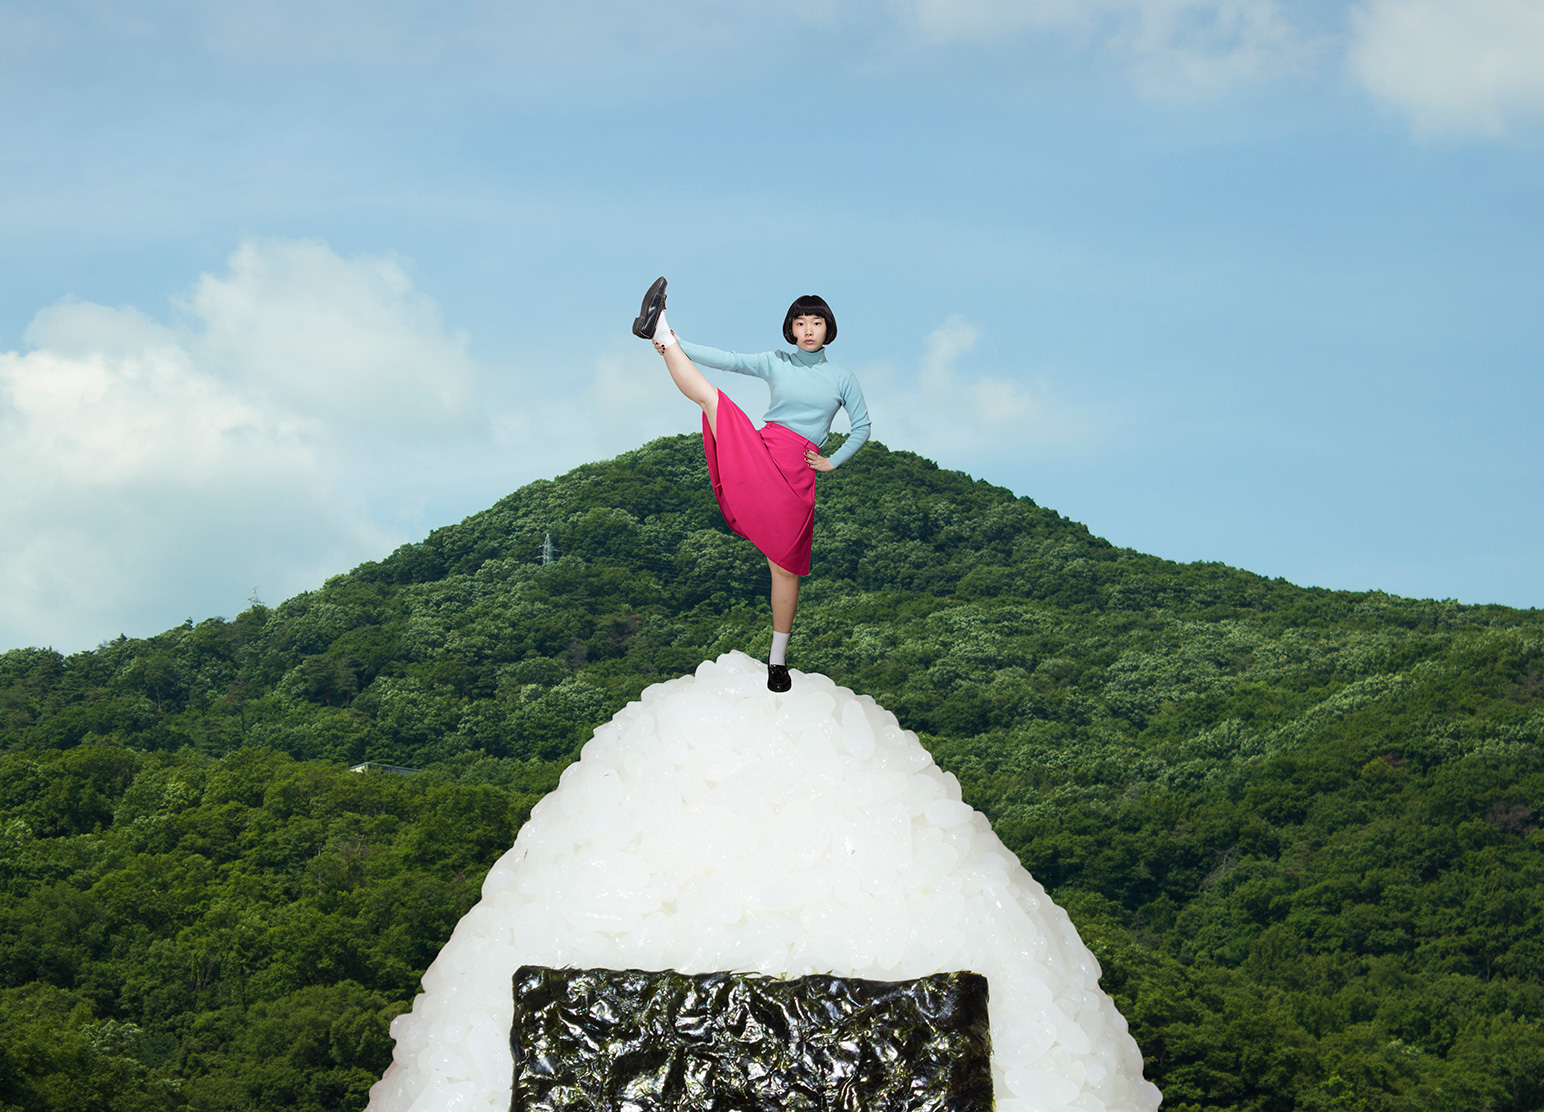 momenta-biennale-izumi-miyazaki-riceball-mountain